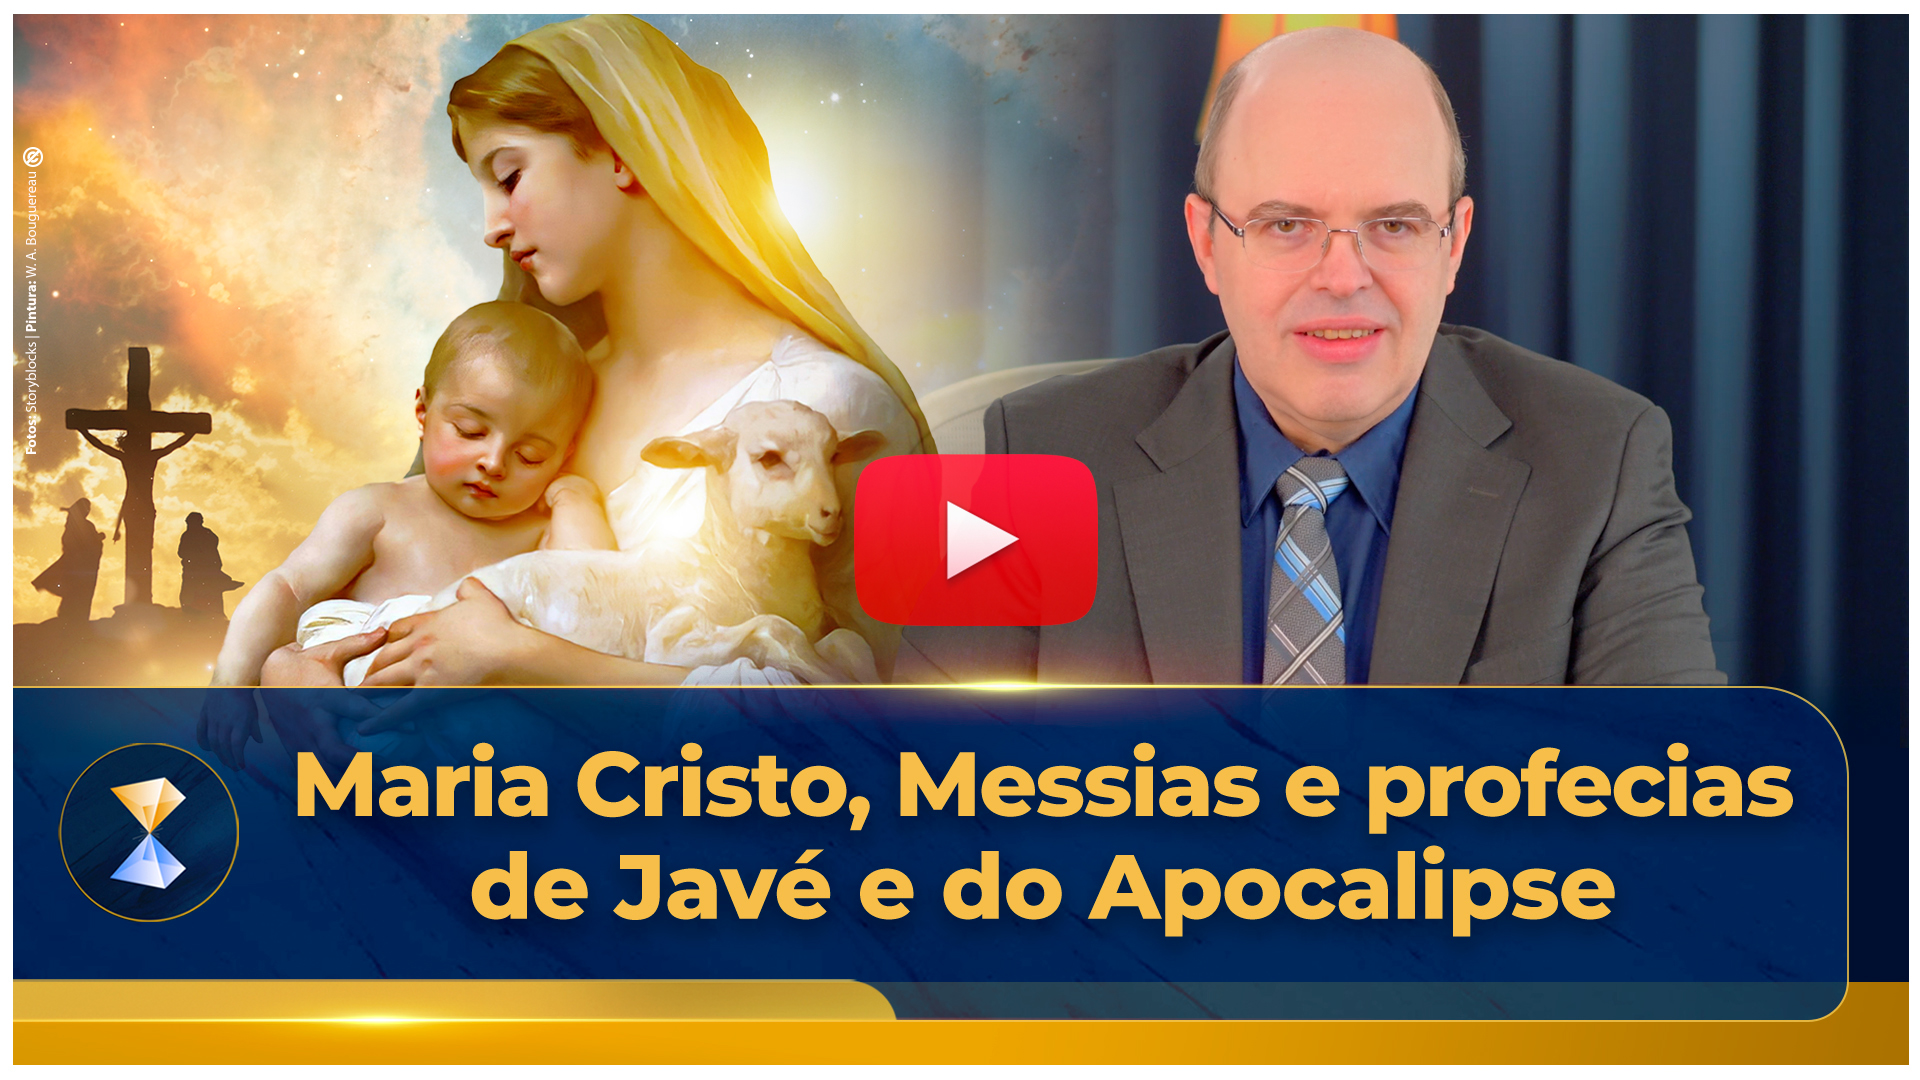 Maria Cristo, Messias e profecias de Javé e do Apocalipse